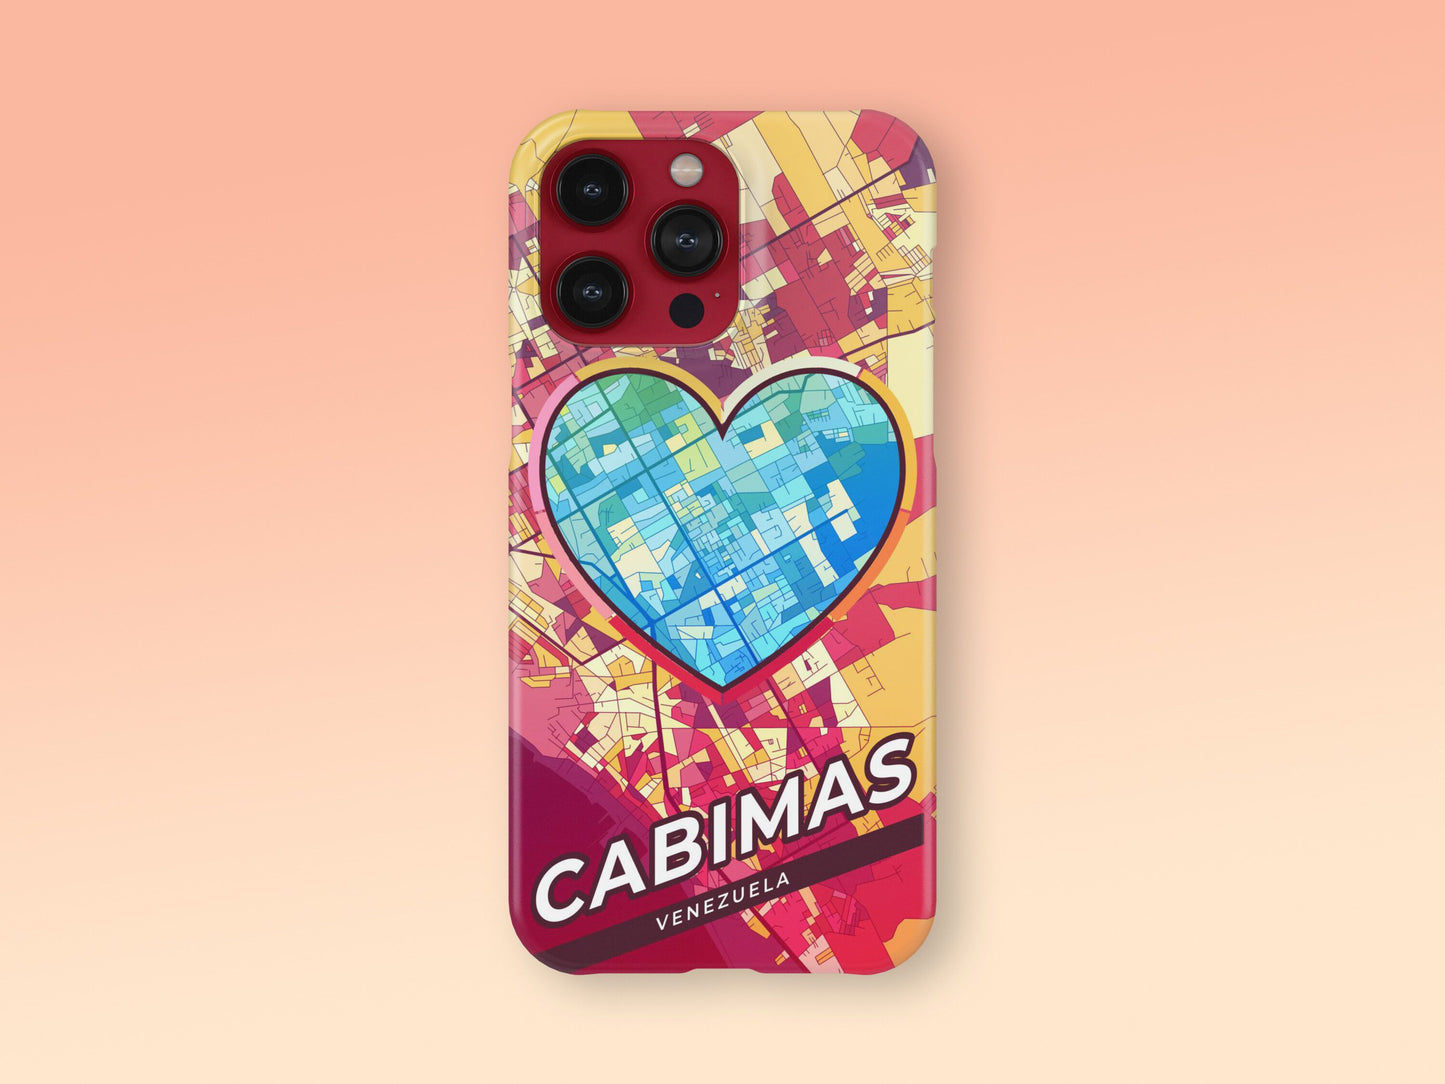 Cabimas Venezuela slim phone case with colorful icon. Birthday, wedding or housewarming gift. Couple match cases. 2